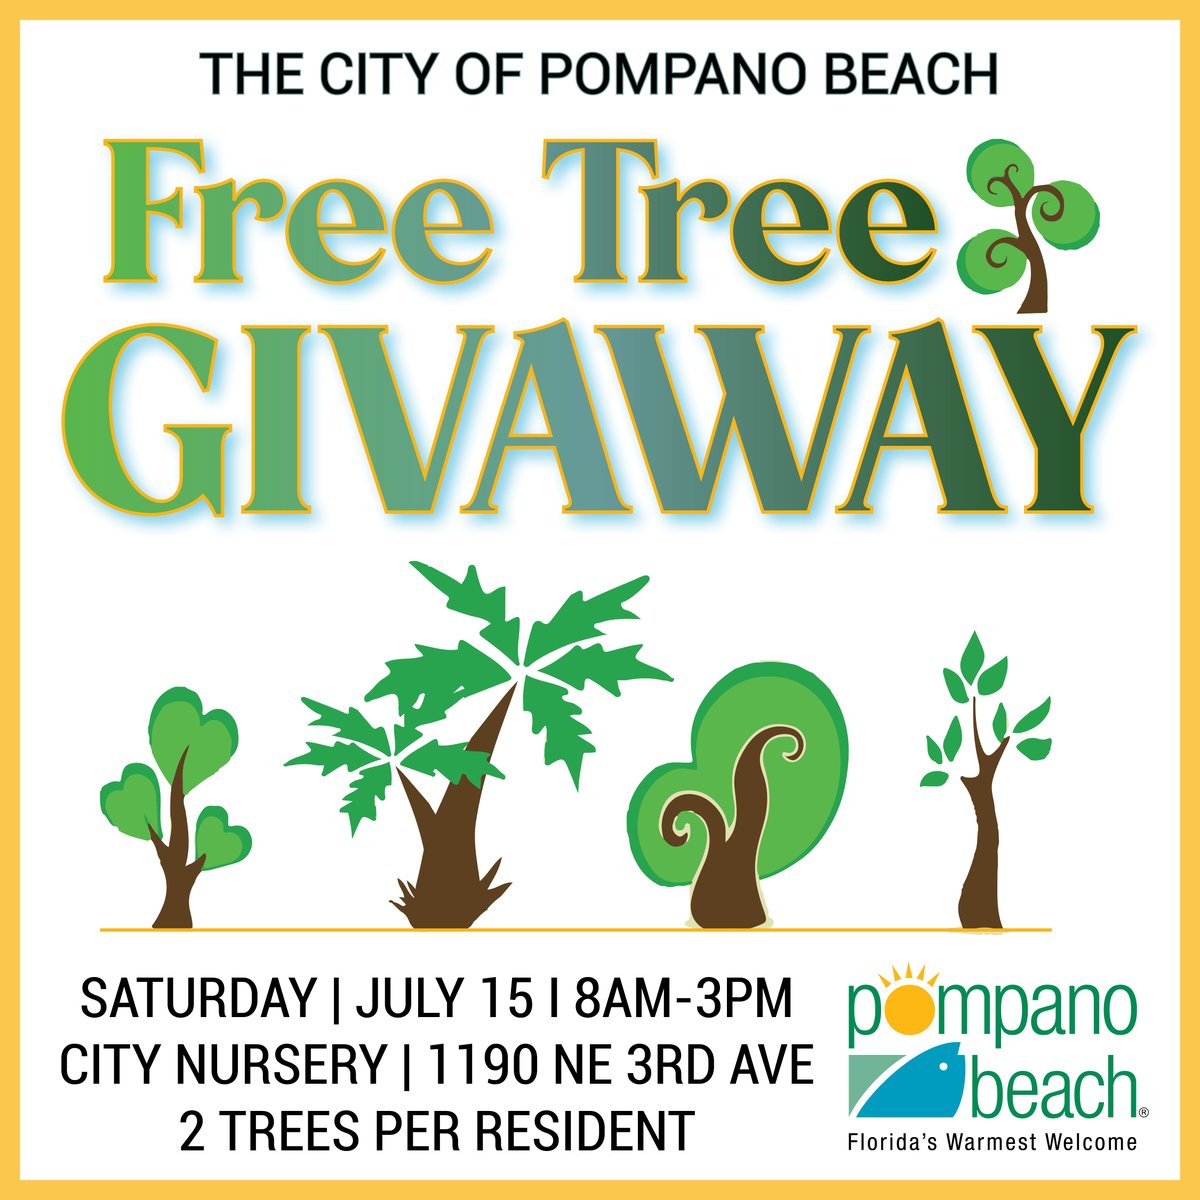 LAST CHANCE for #FreeTrees tomorrow (Sat 7/15)!
📍 City Nursery, 1190 NE 3rd Ave #PompanoBeach